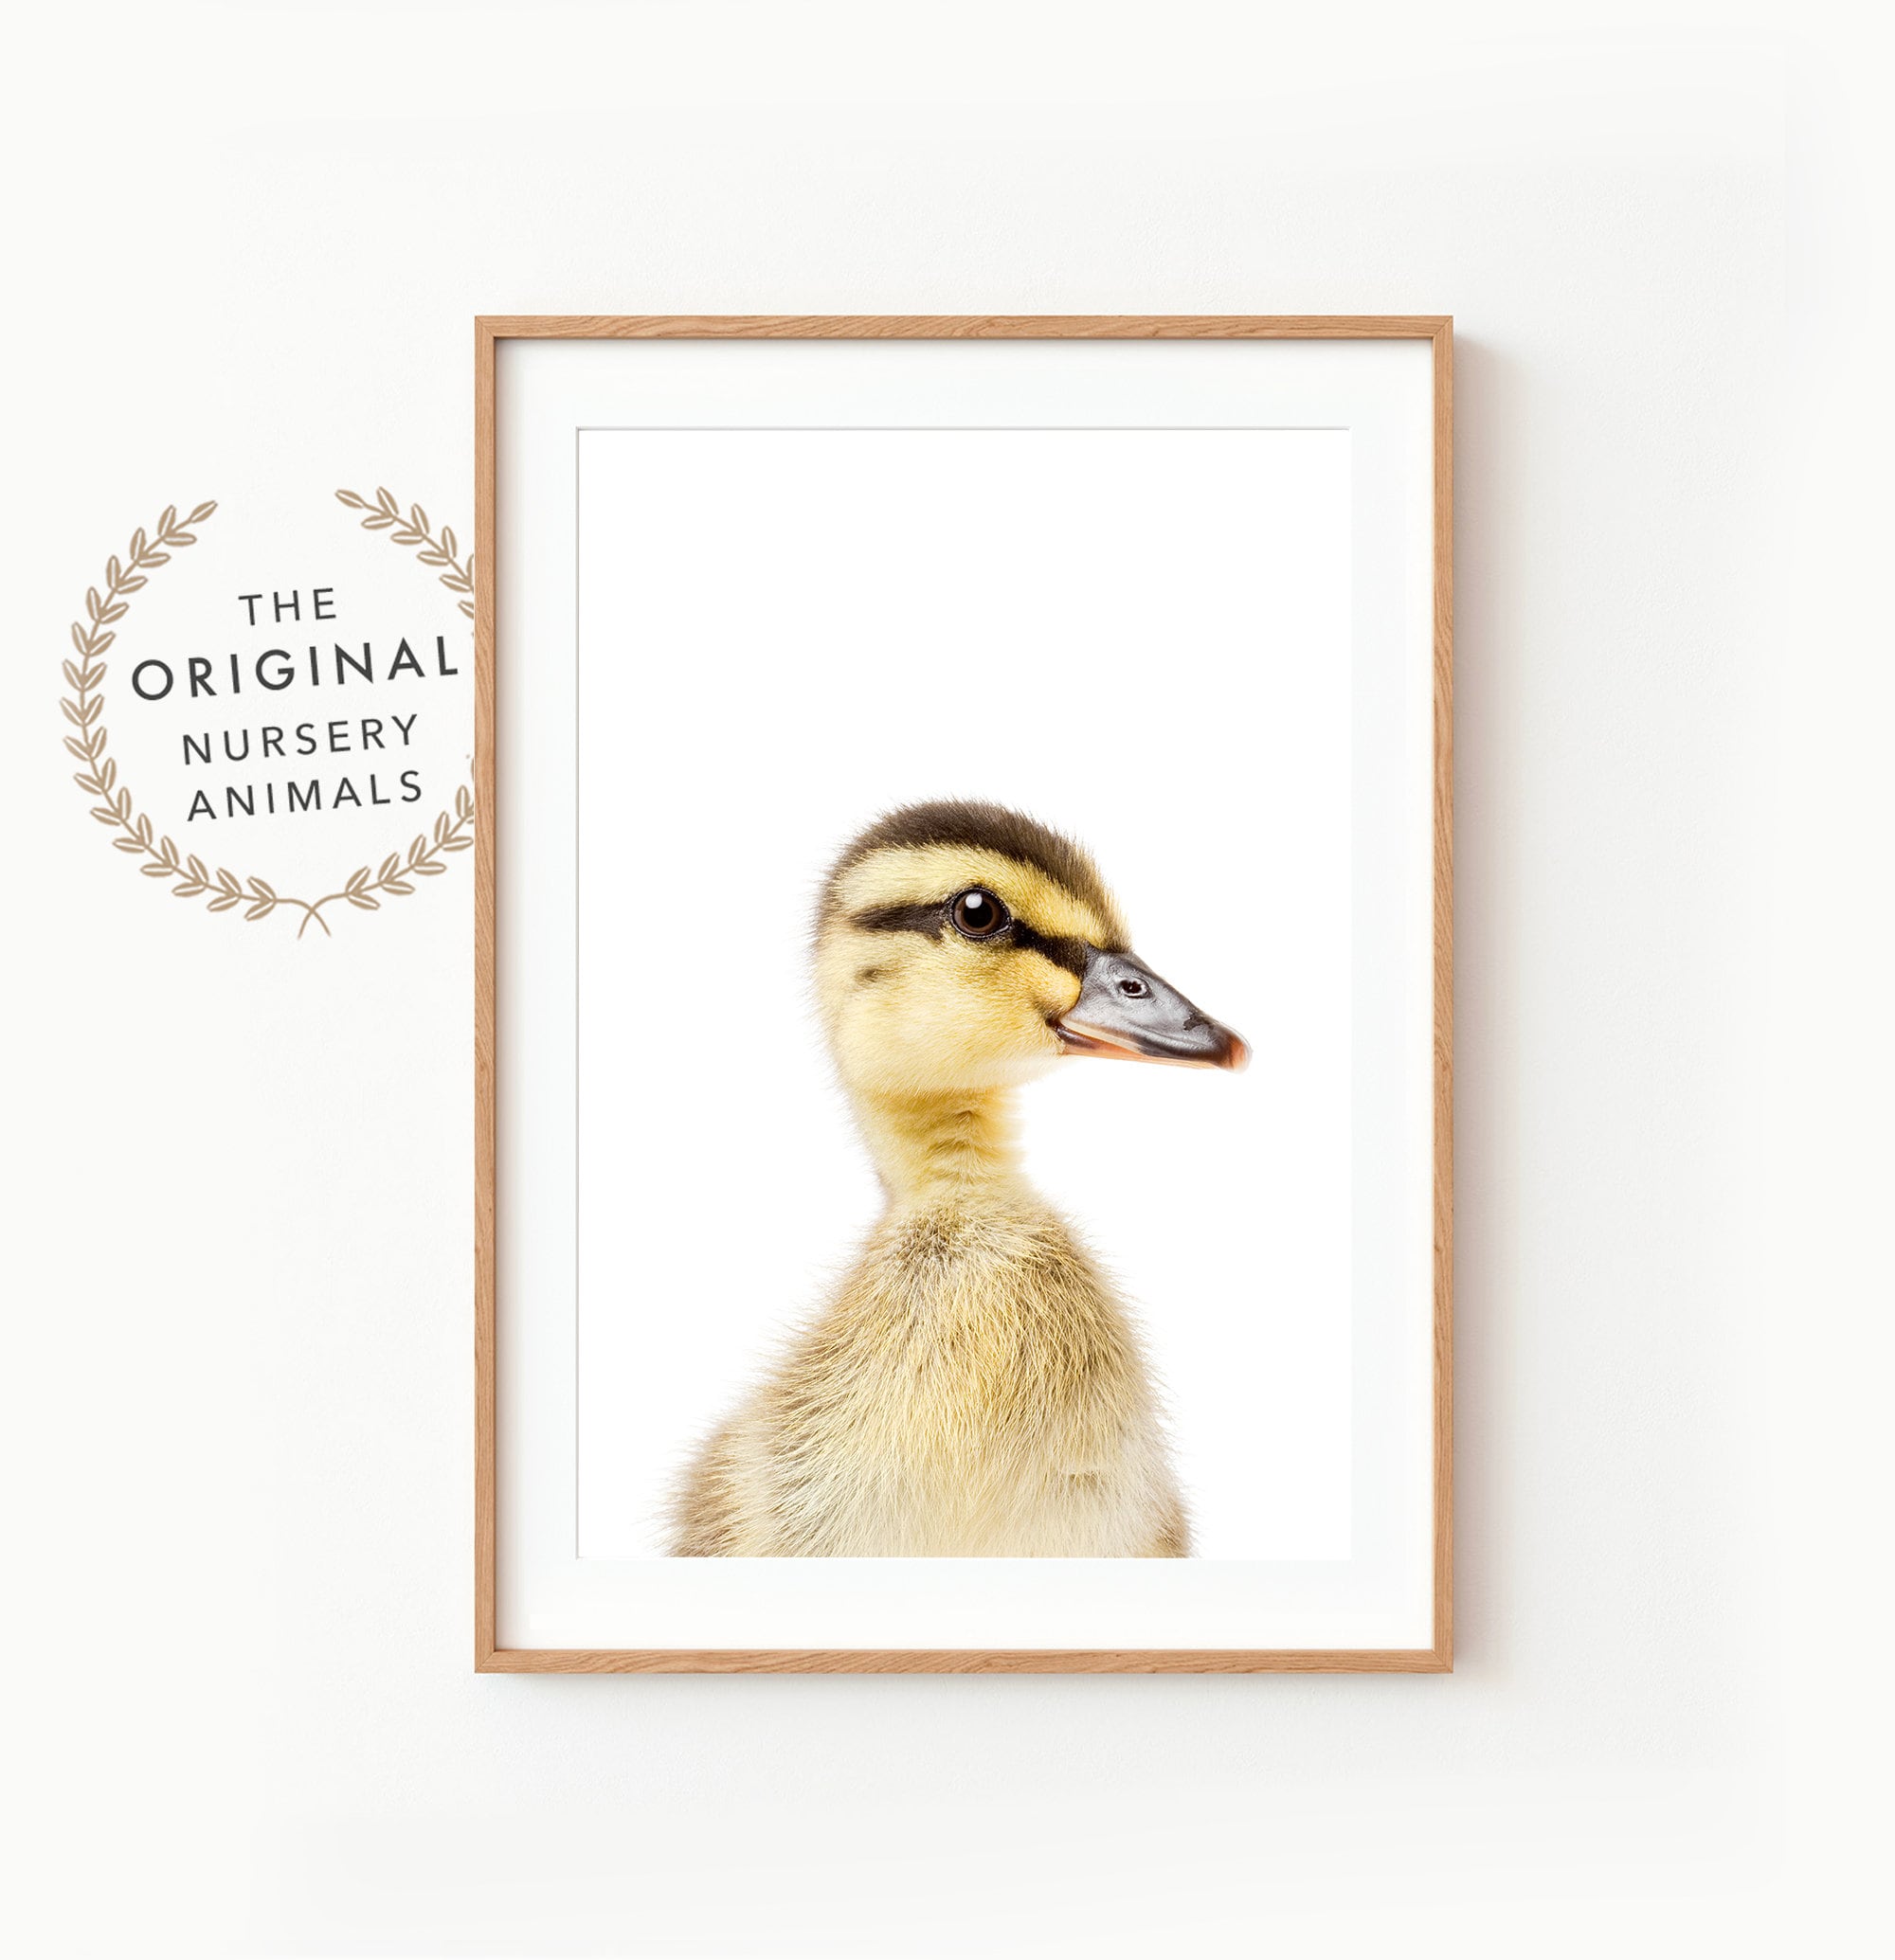 Baby duck art, Duckling farm animal nursery artwork by Paper Llamas